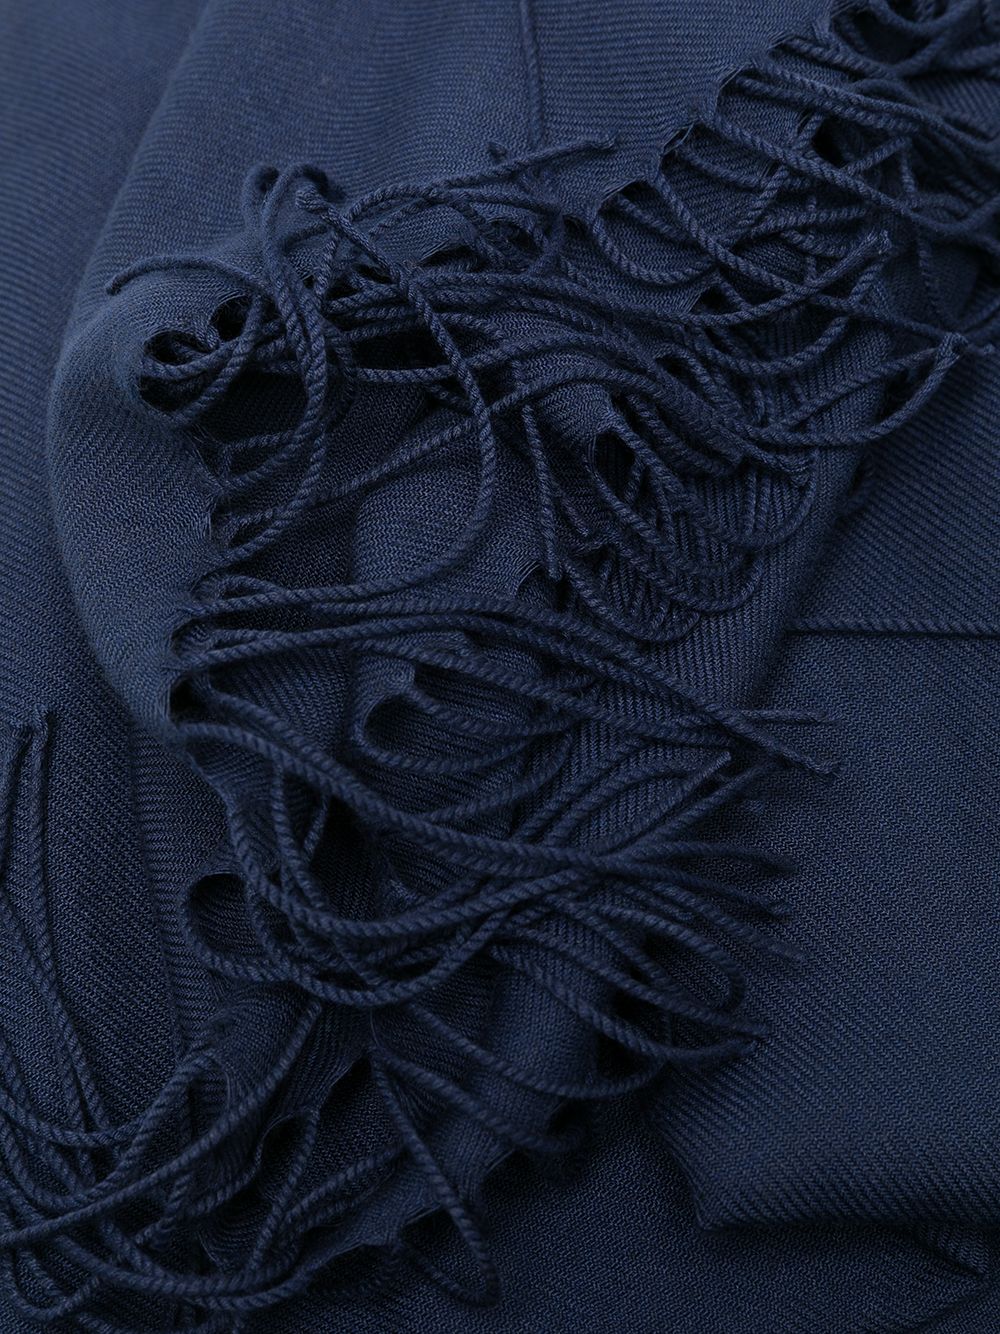 фото Emporio armani шарф тонкой вязки